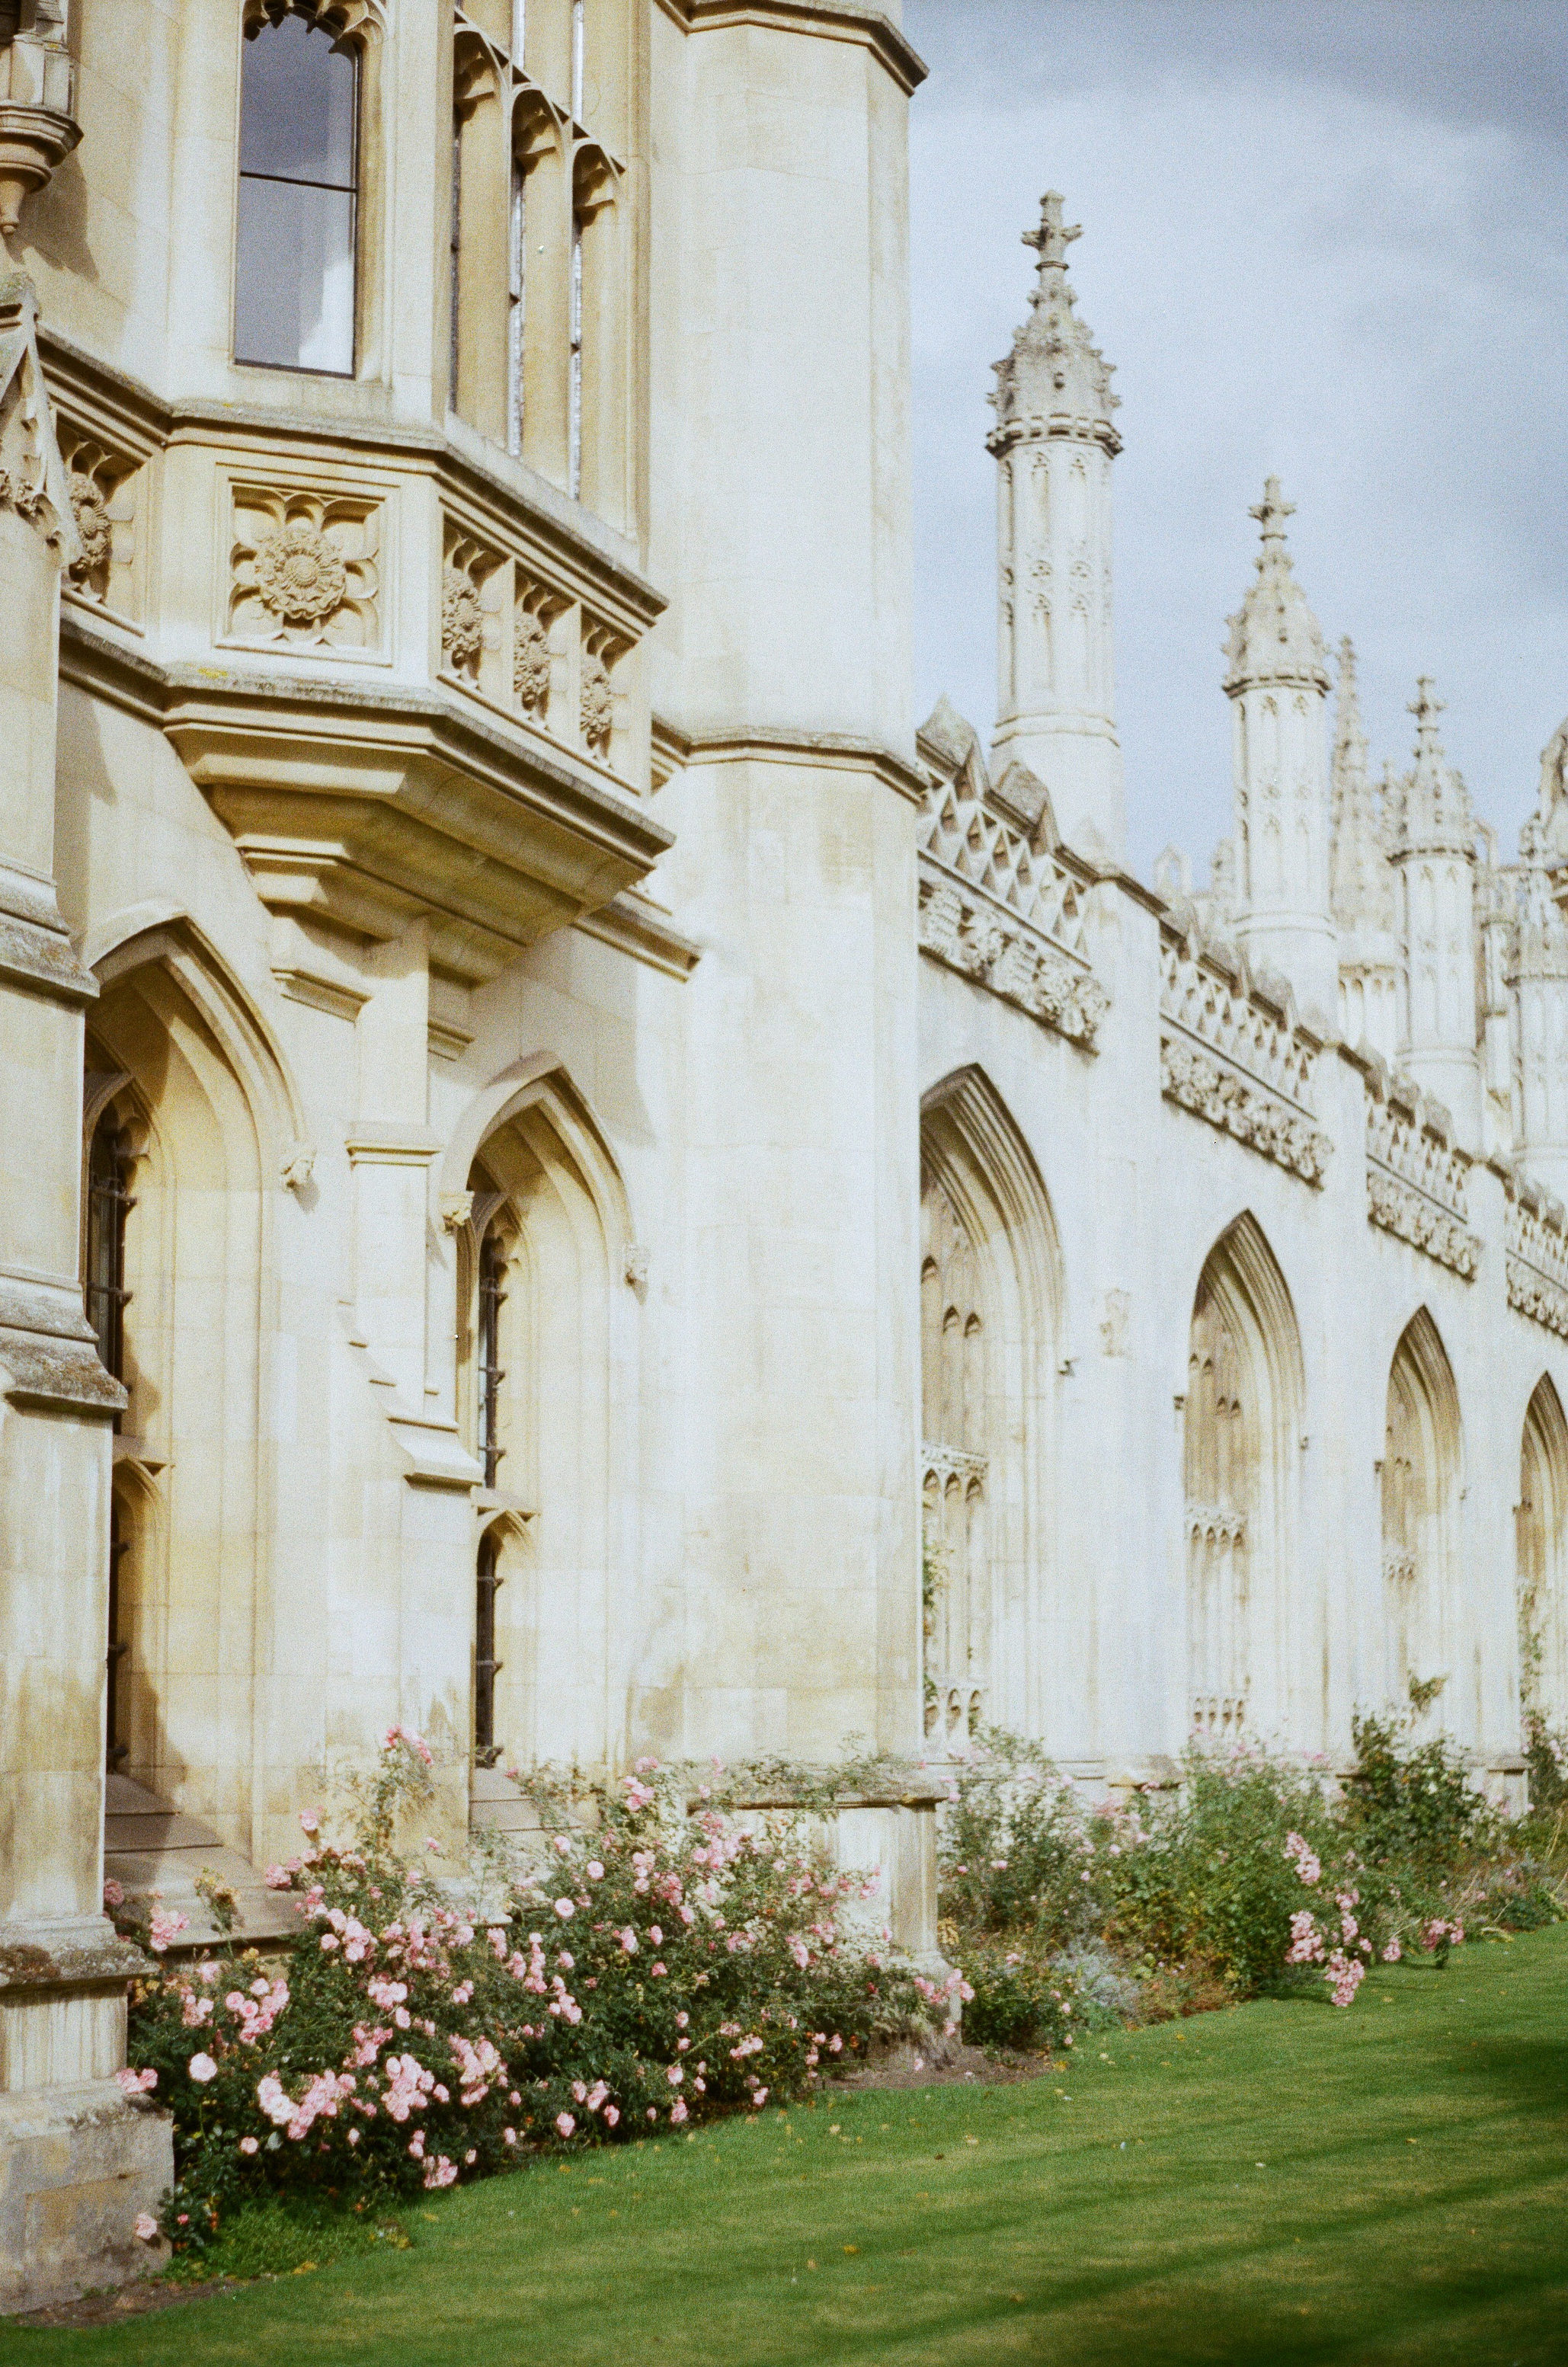 Photo Diaries: Cambridge